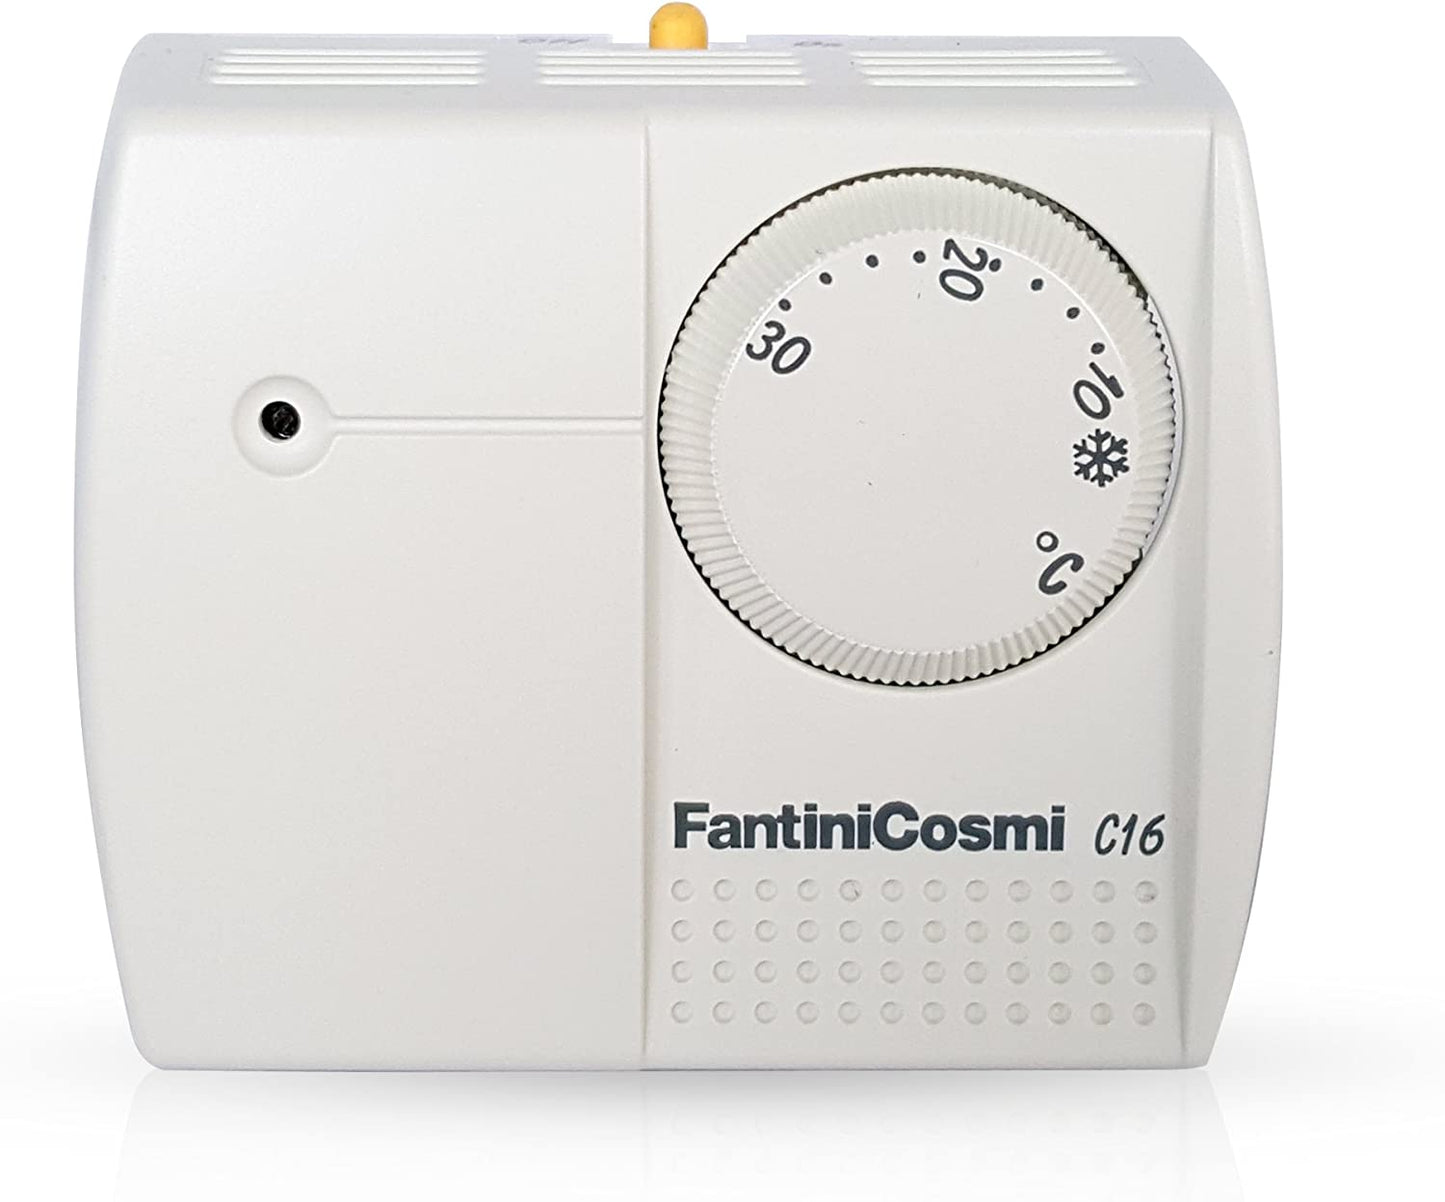 FANTINI COSMI C16IL Electromechanical Gas Expansion Thermostat with Indicator Light, White